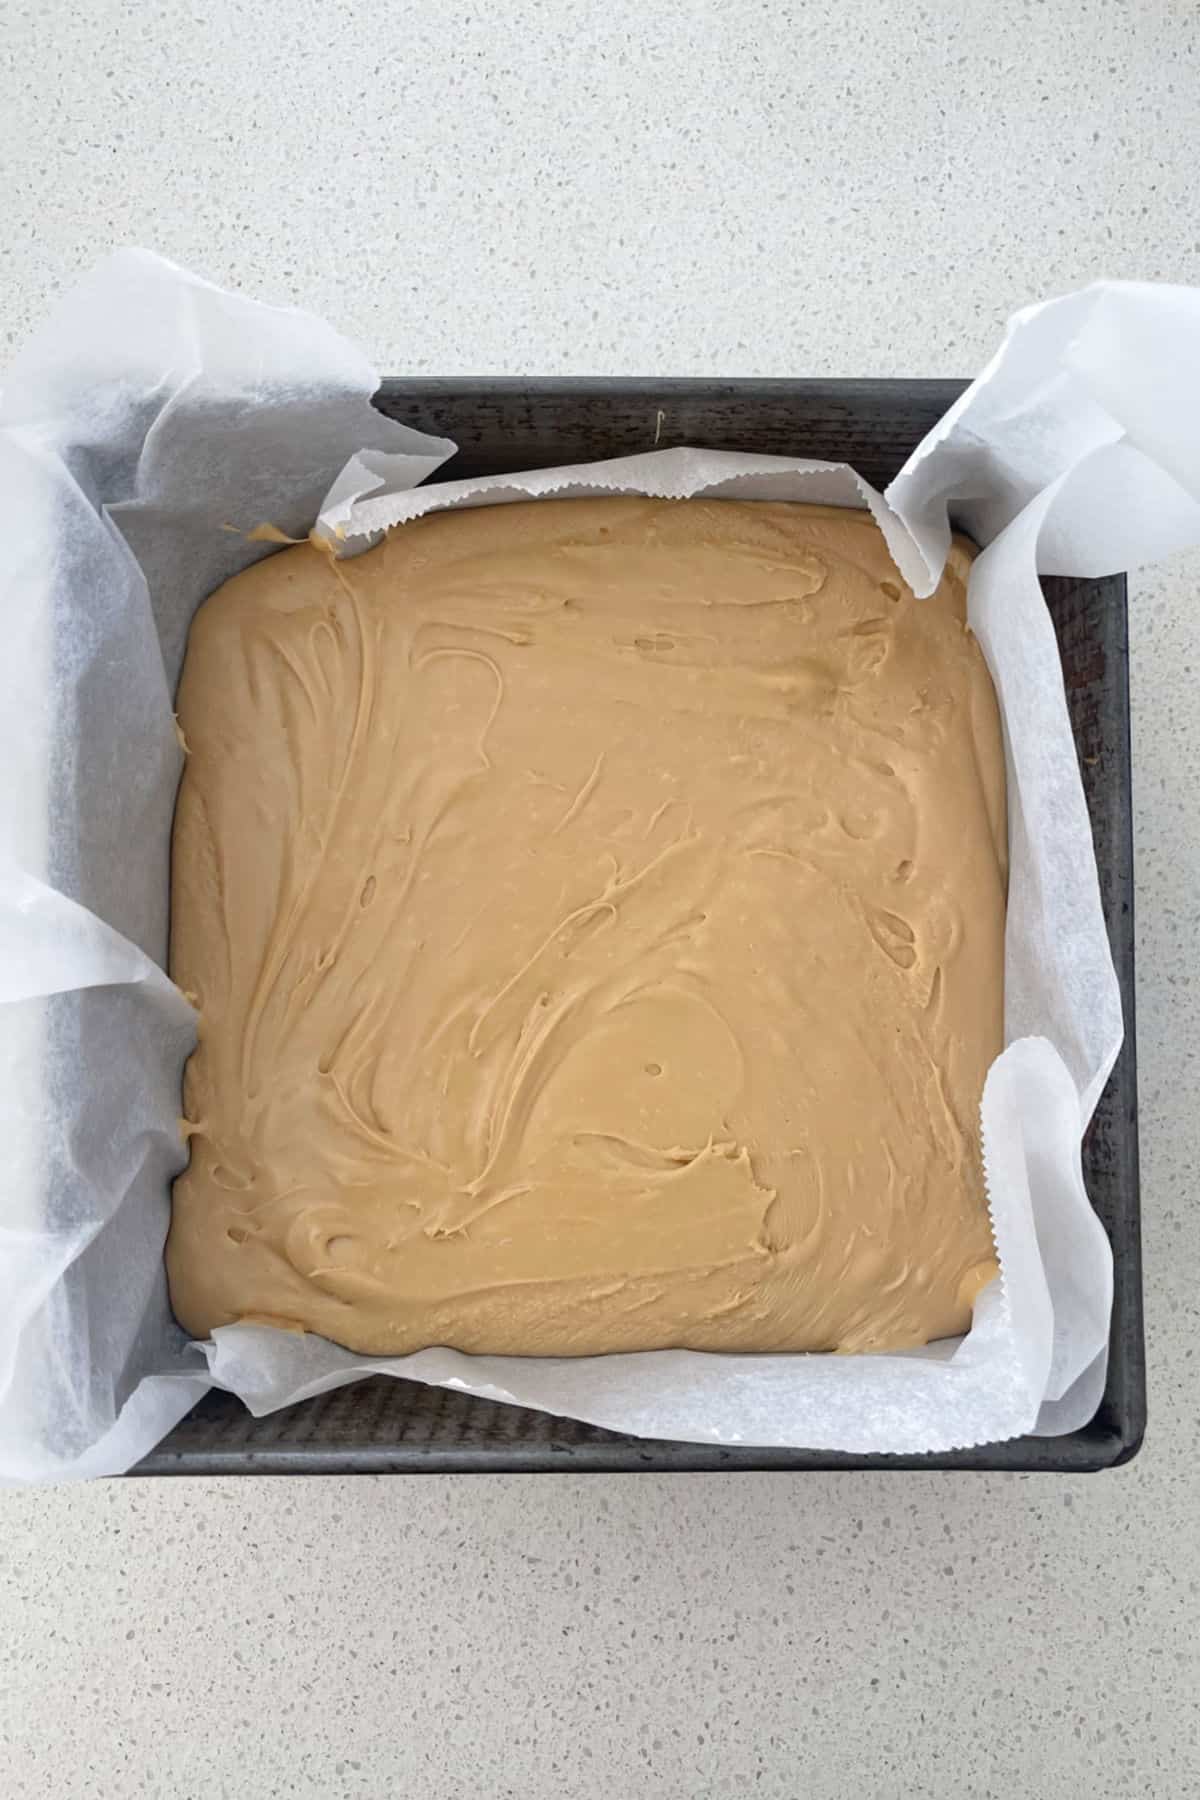 Biscoff fudge poured into a baking tin.